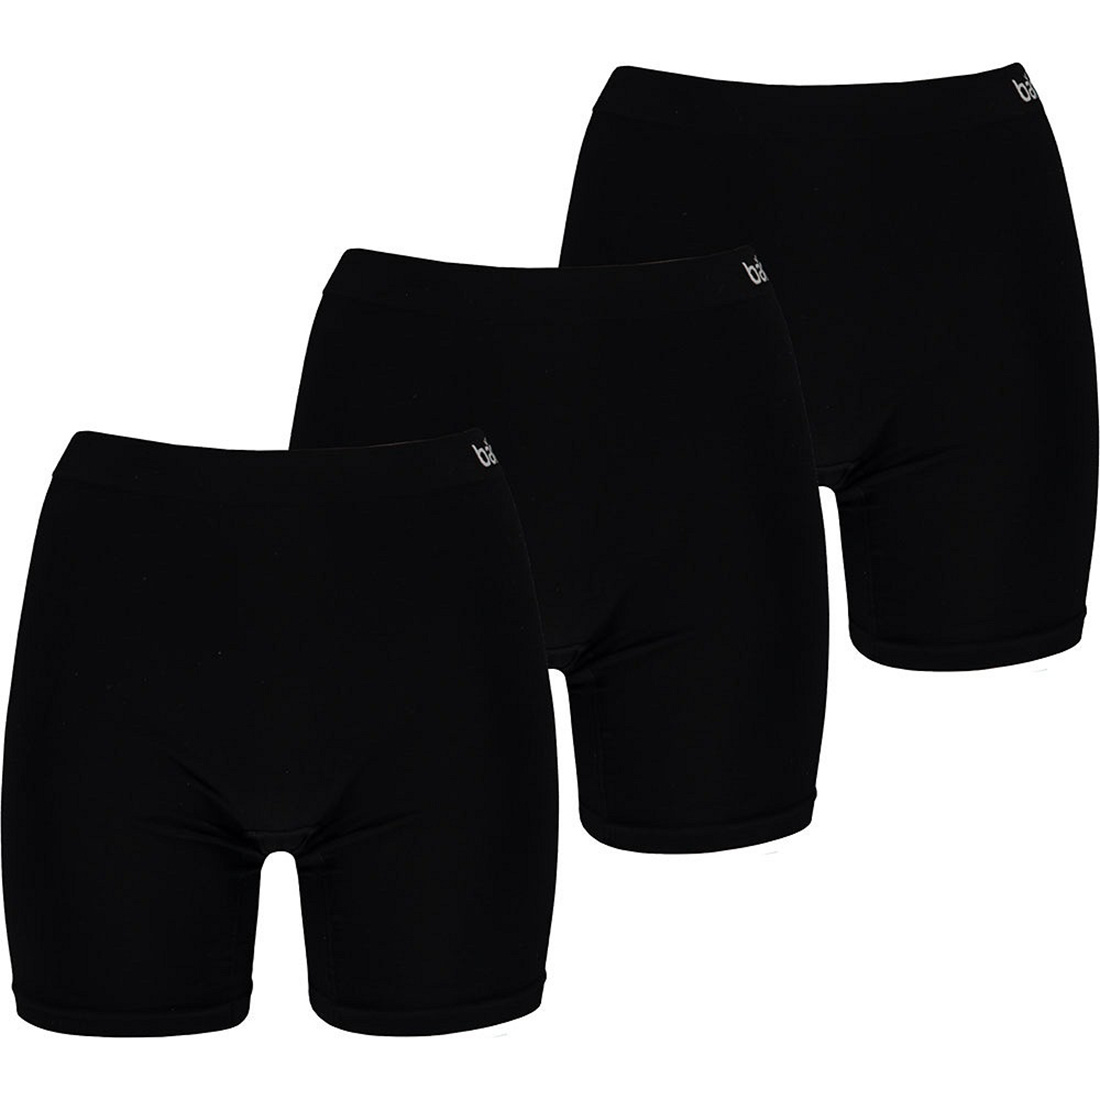 Apollo Seamless Long Short Bamboo Underwear Black 3-Pack